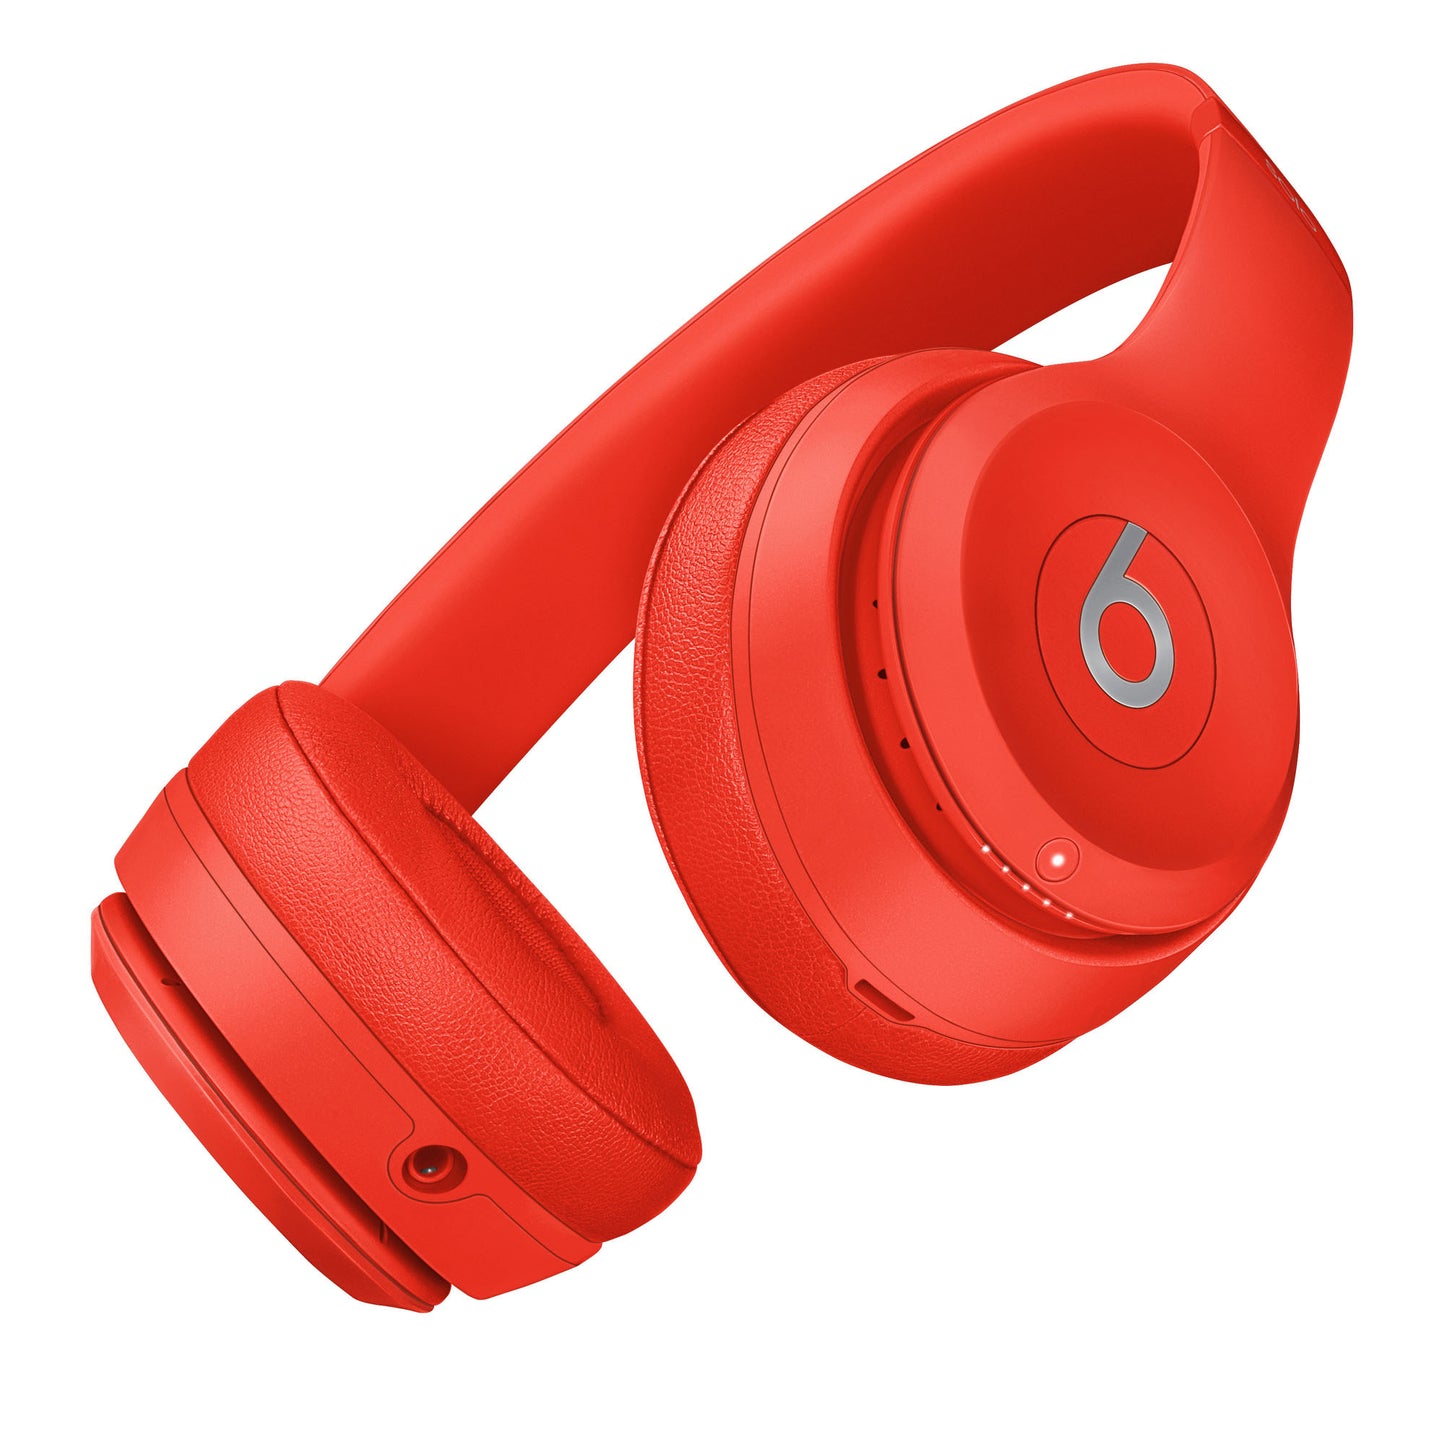 Beats Solo3 Wireless Headphones - Red